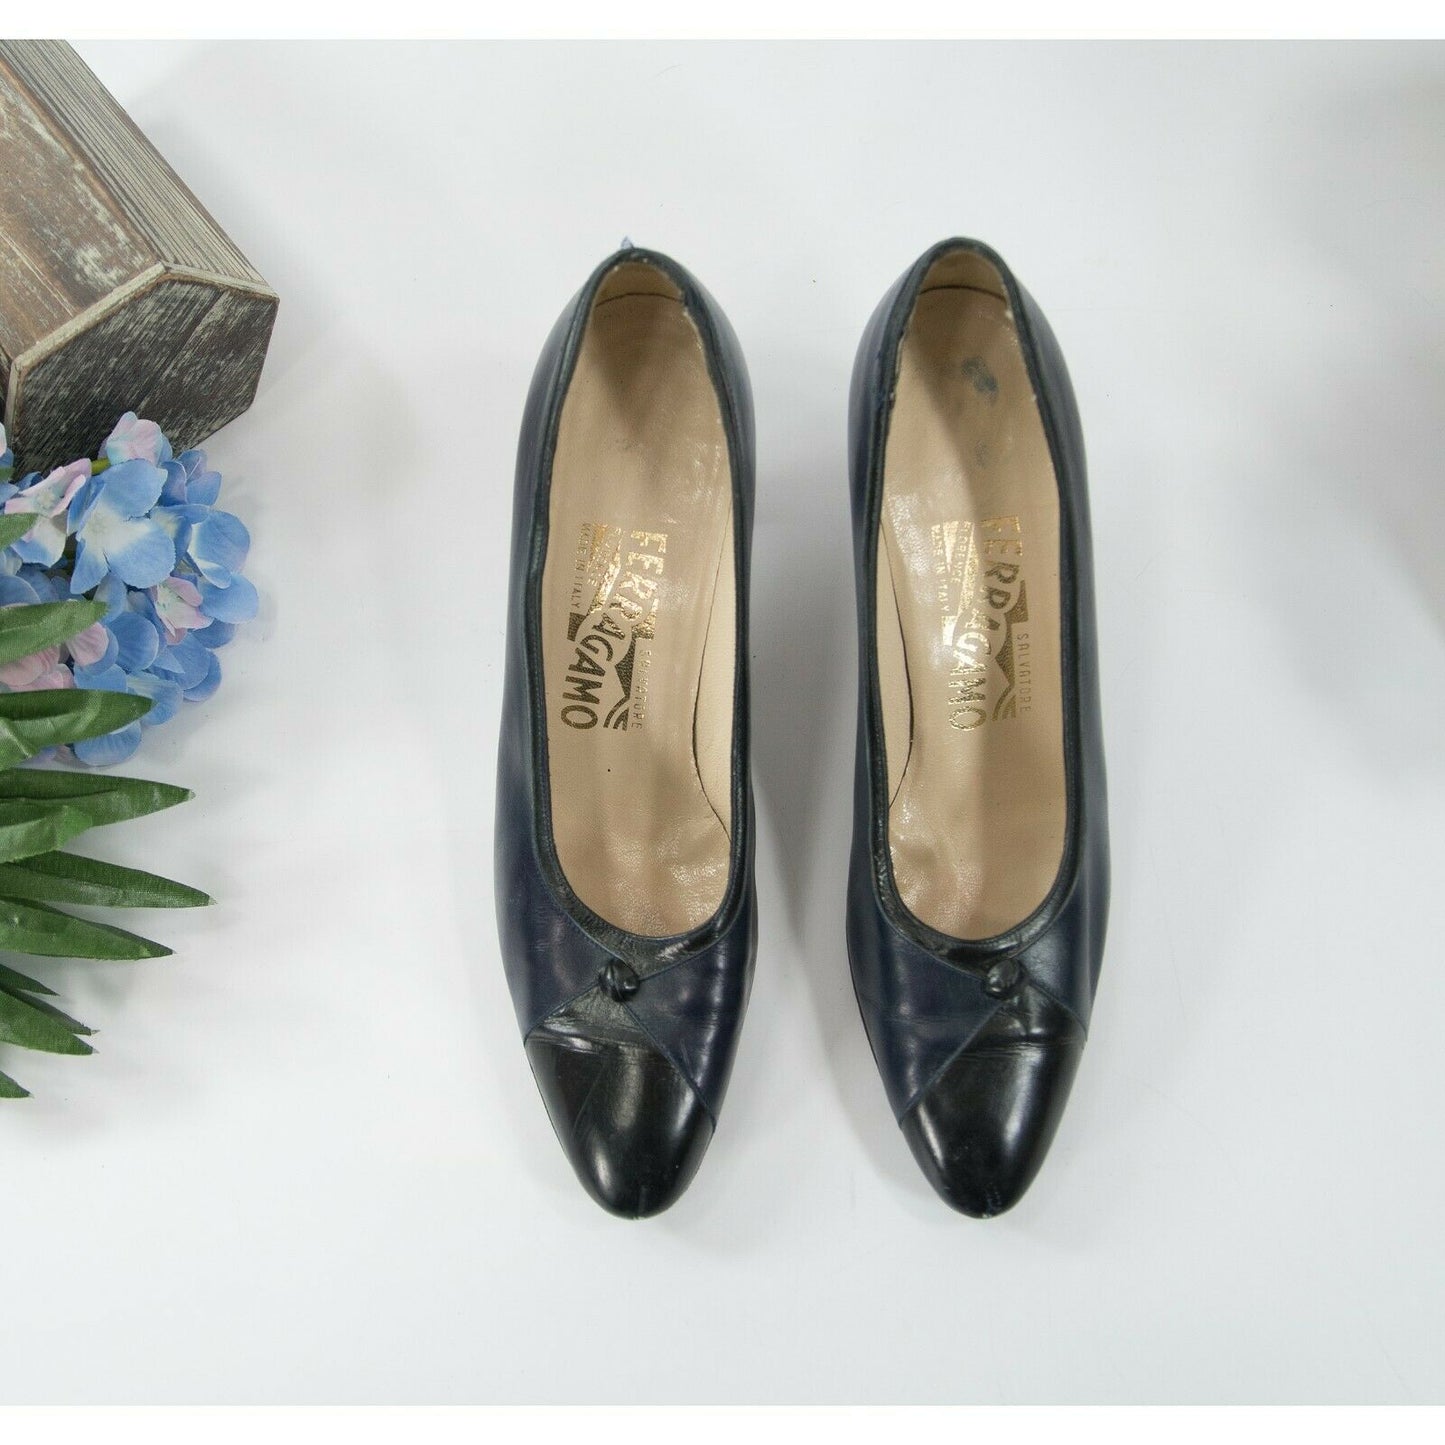 Salvatore Ferragamo Navy Black Leather Shoes Heels 8 Narrow